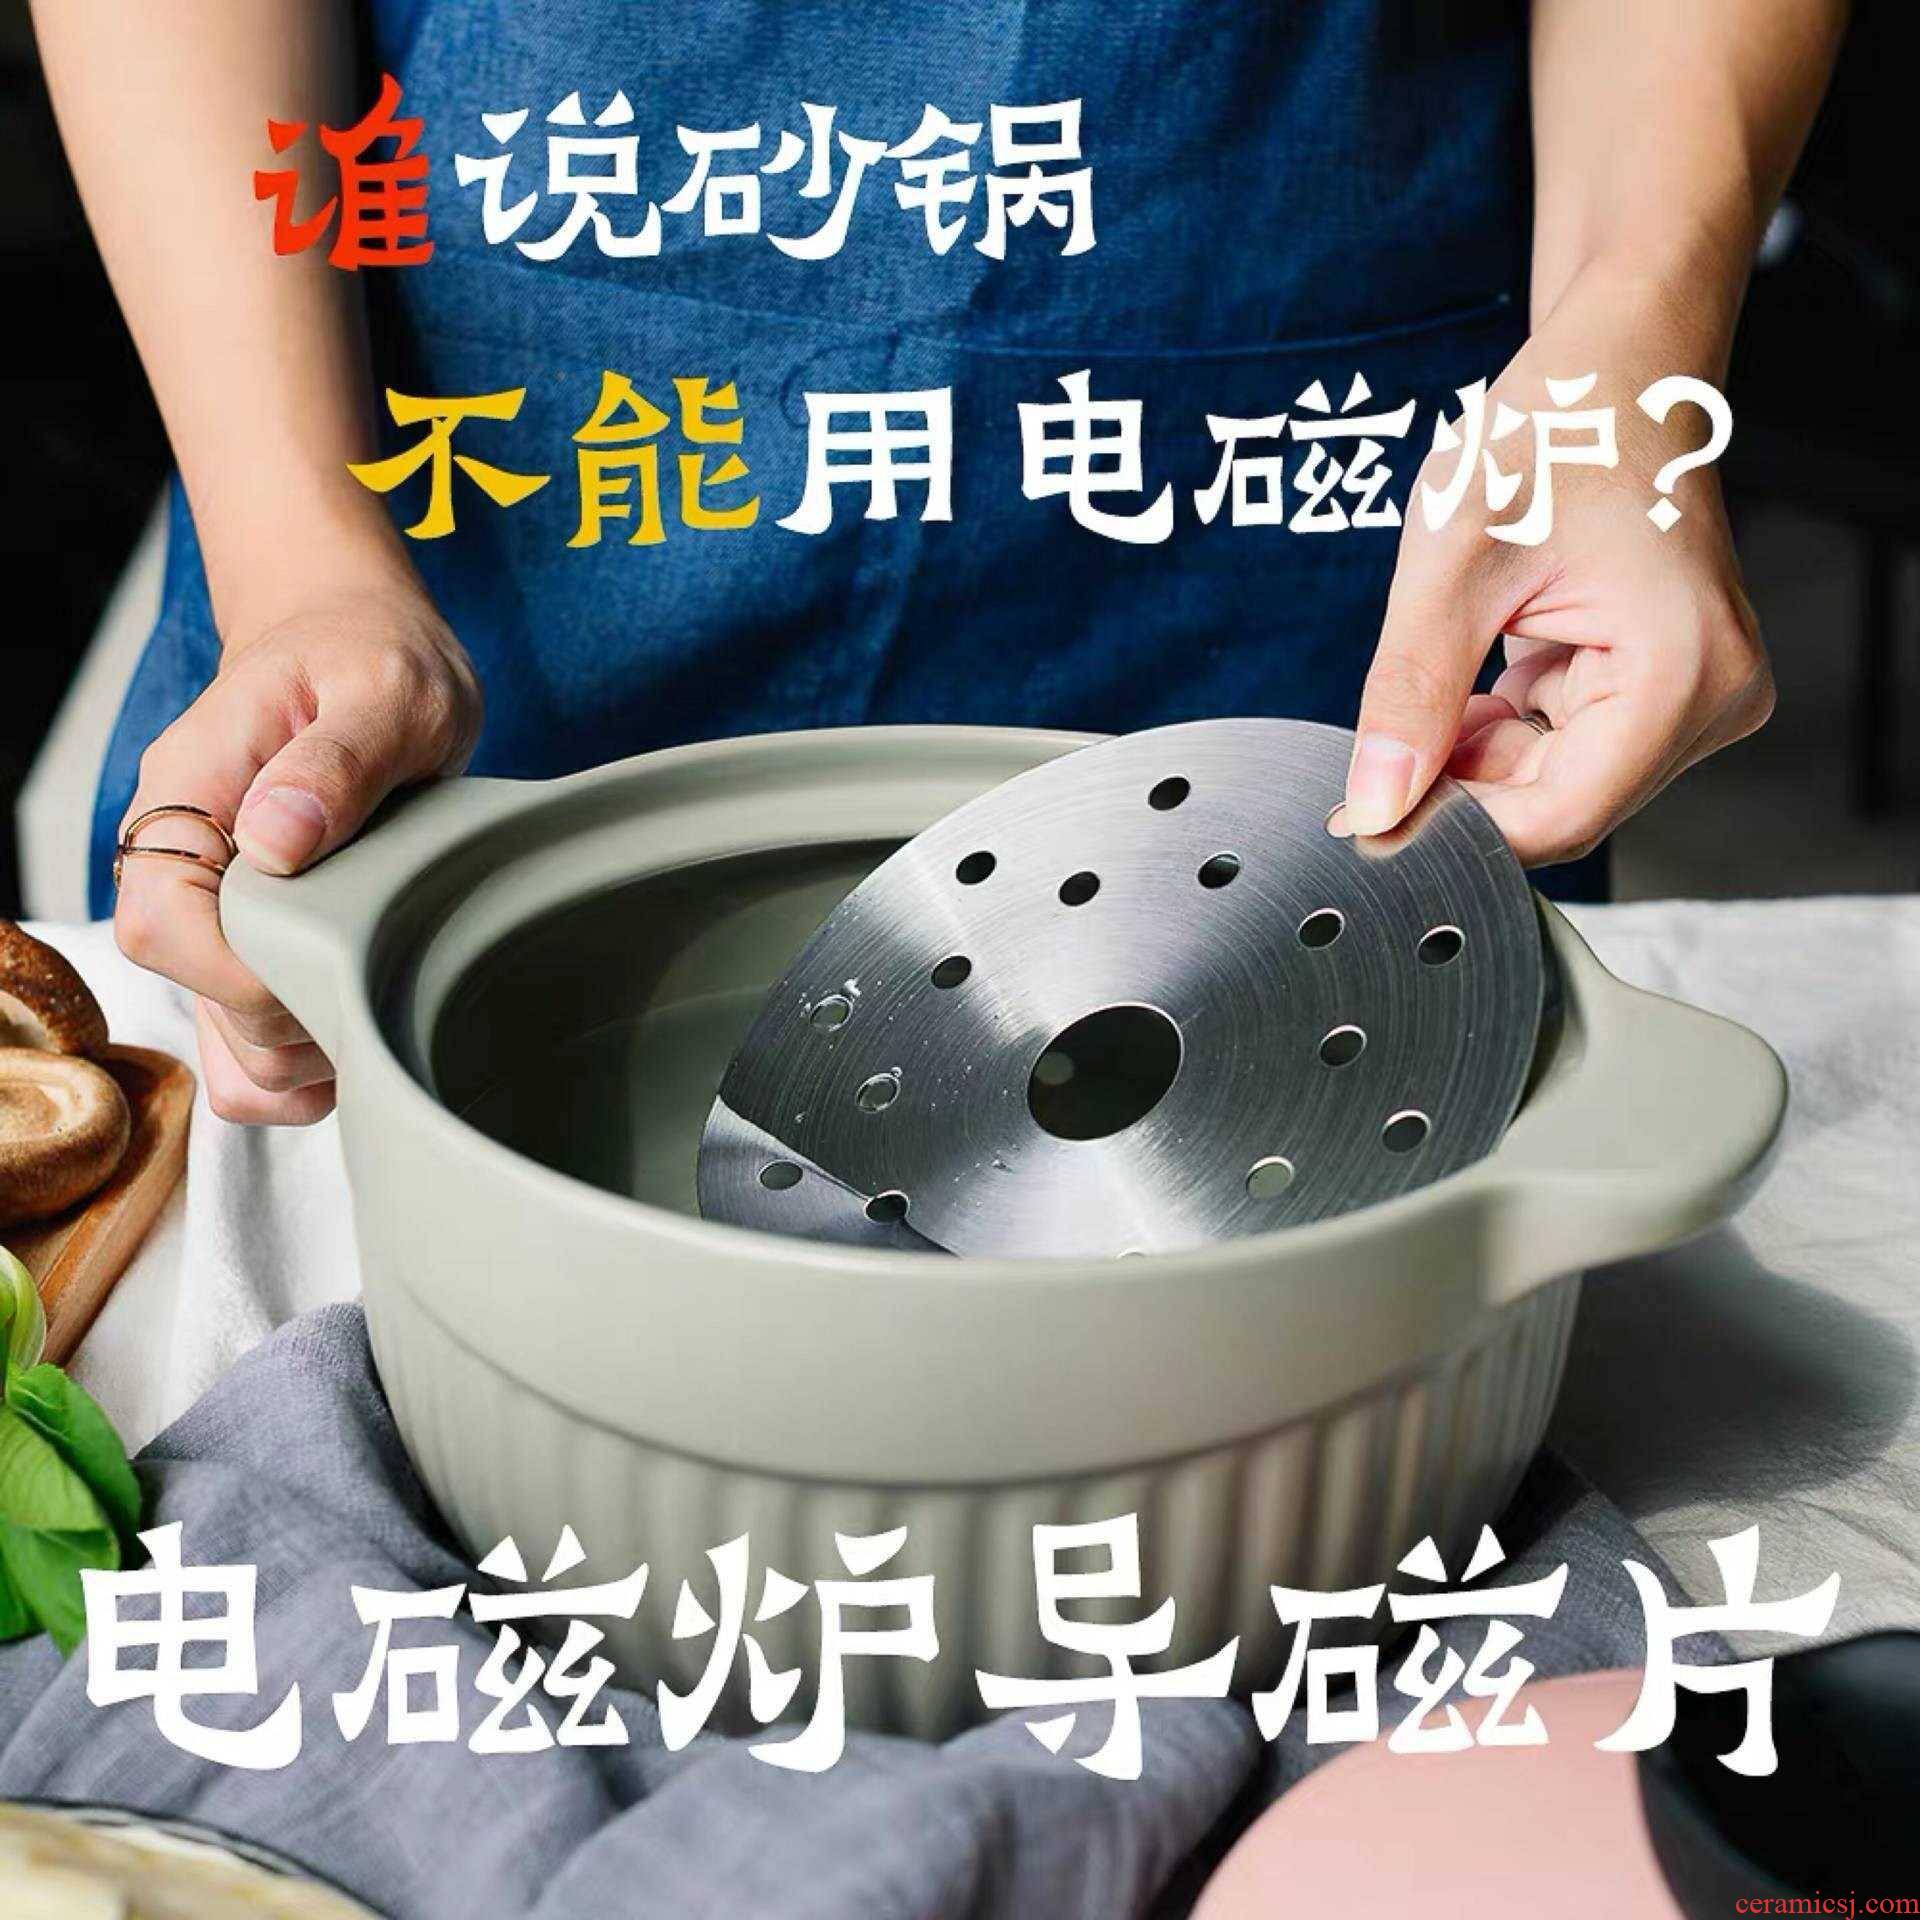 Sand earthenware pot induction cooker plate packages mailed induction cooker pot magnetic conductivity pills glass ceramic pot stew pot does not rust